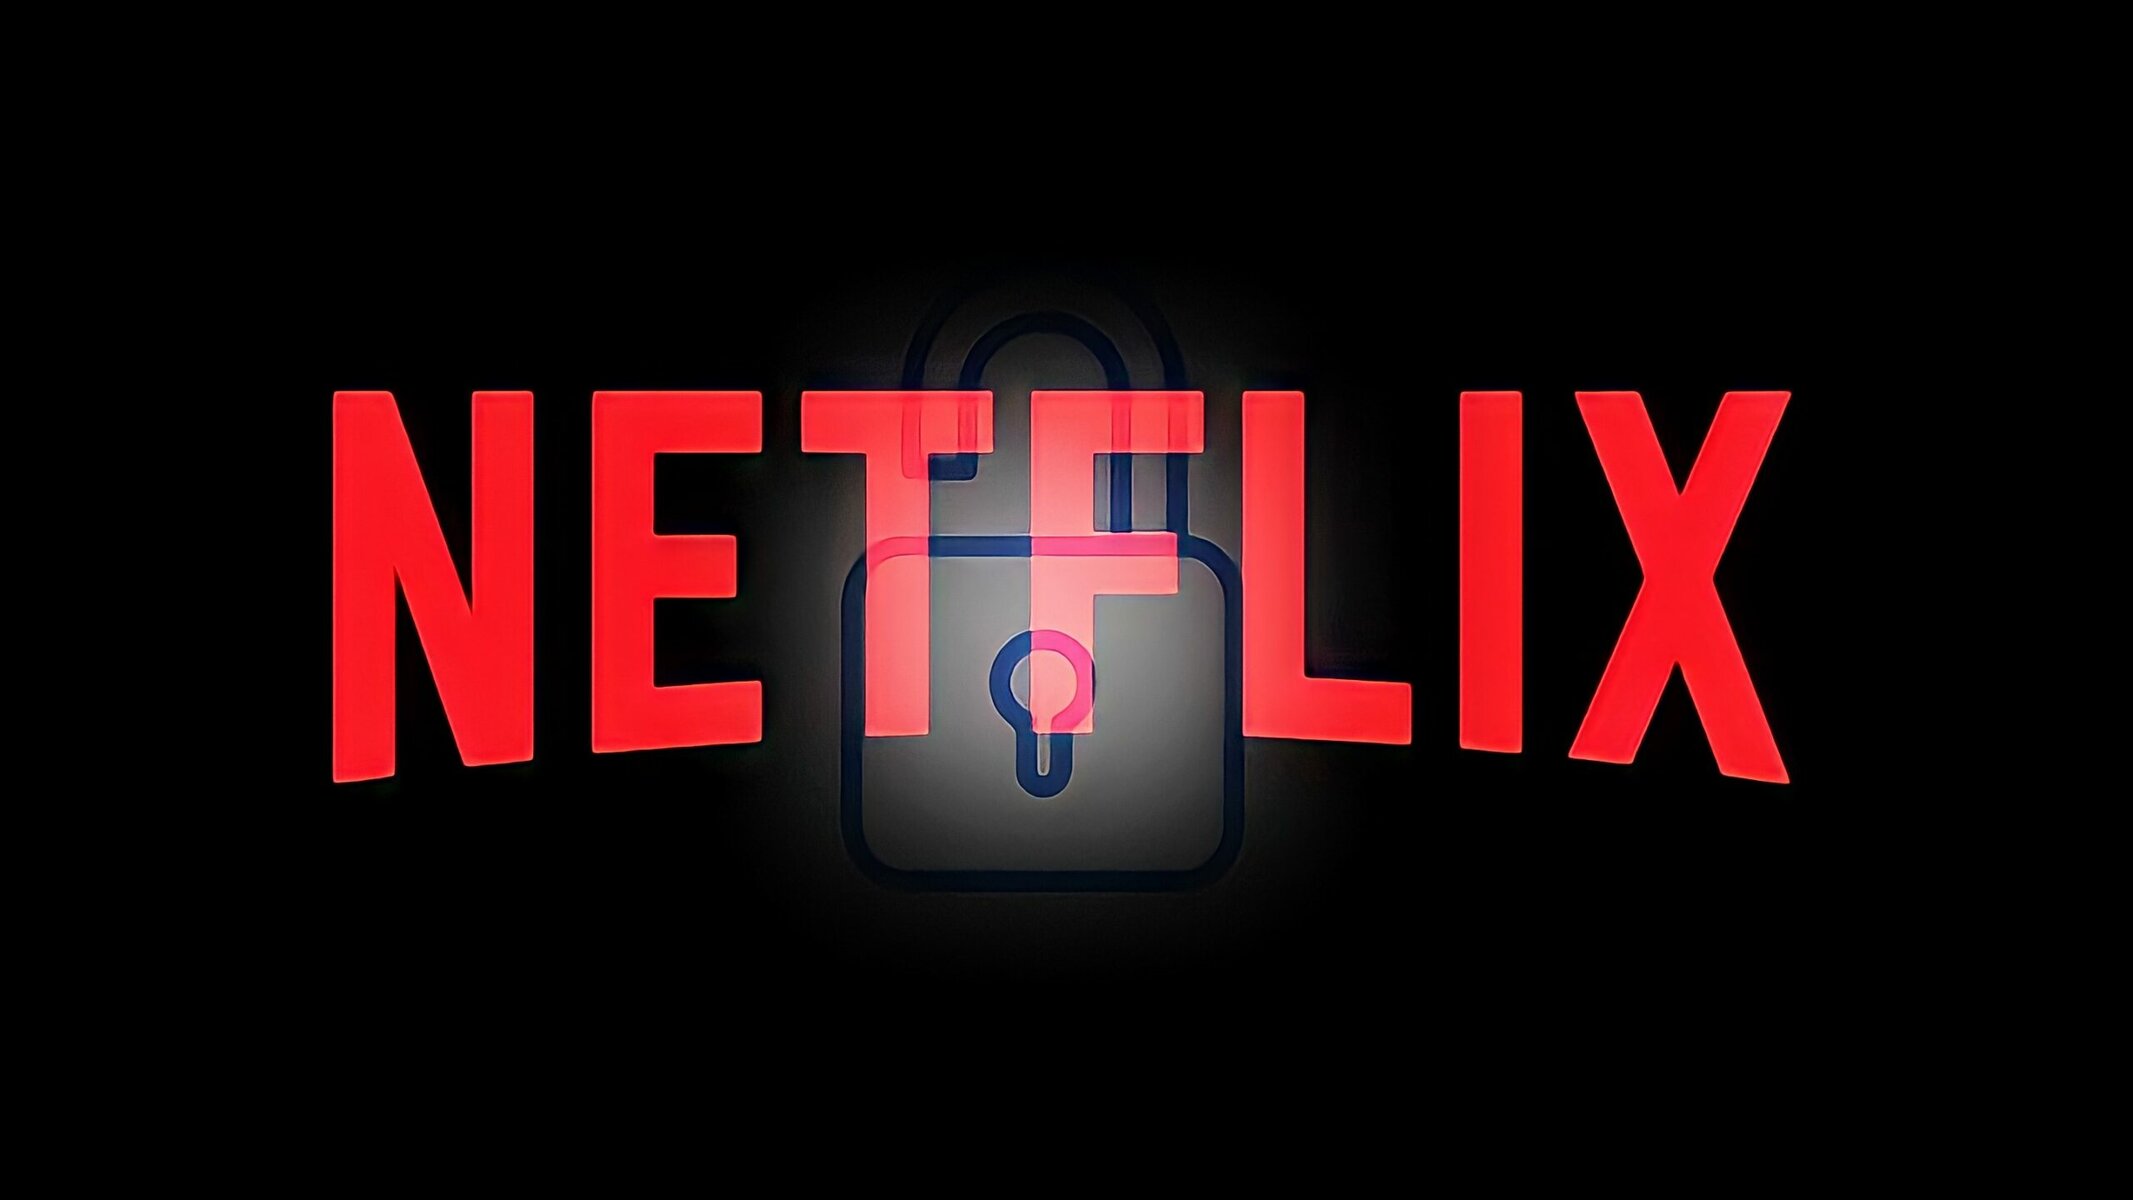 códigos secretos da Netflix terror #celular #netflix